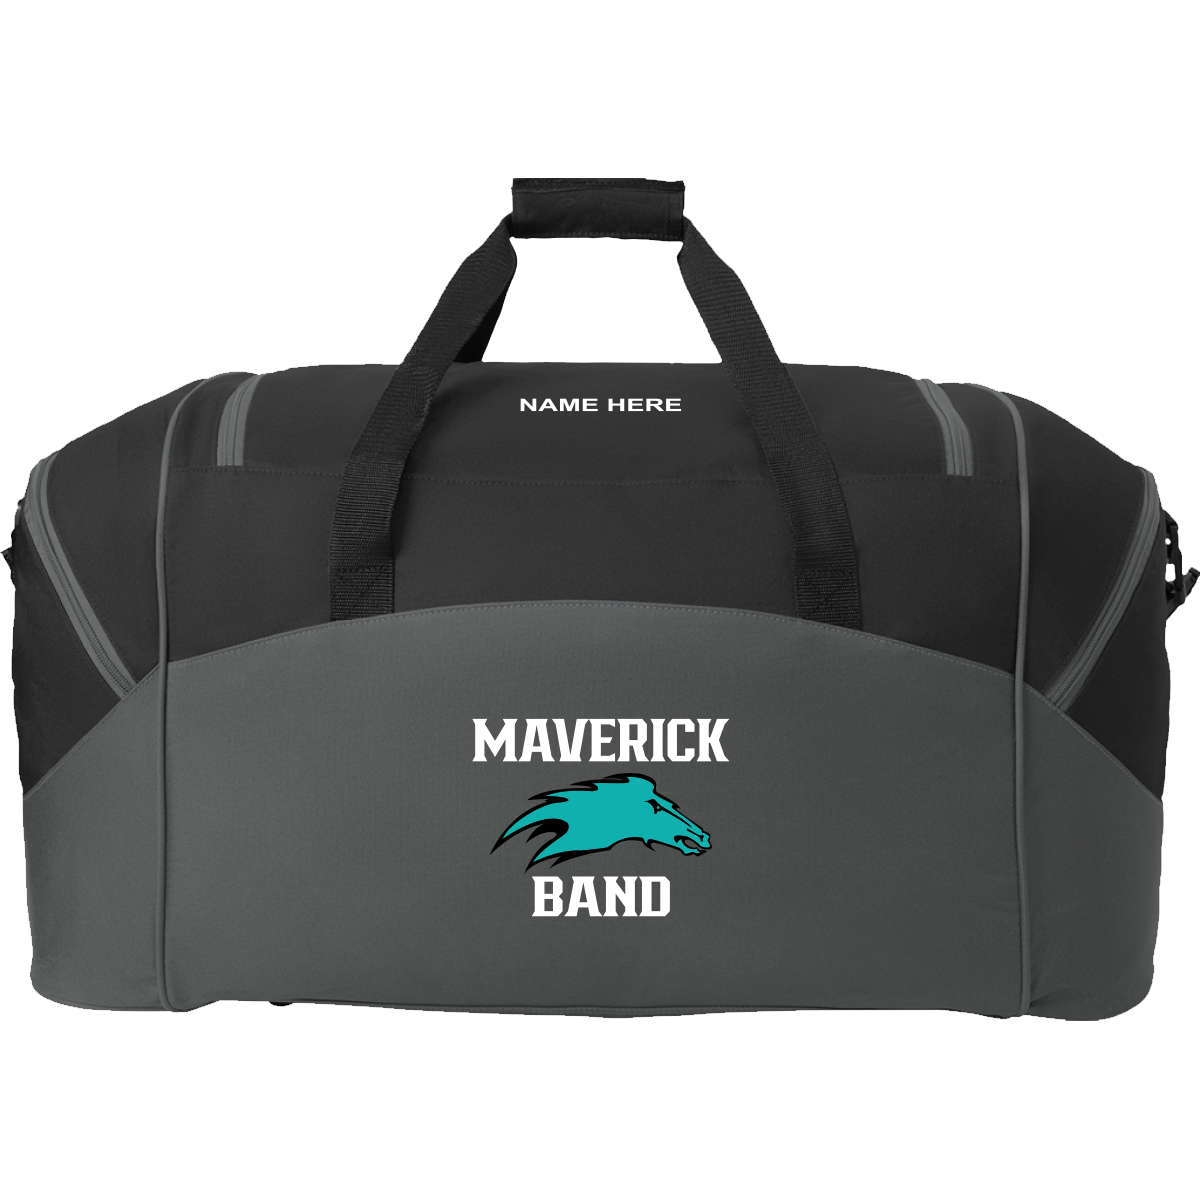 Maverick Tote bag